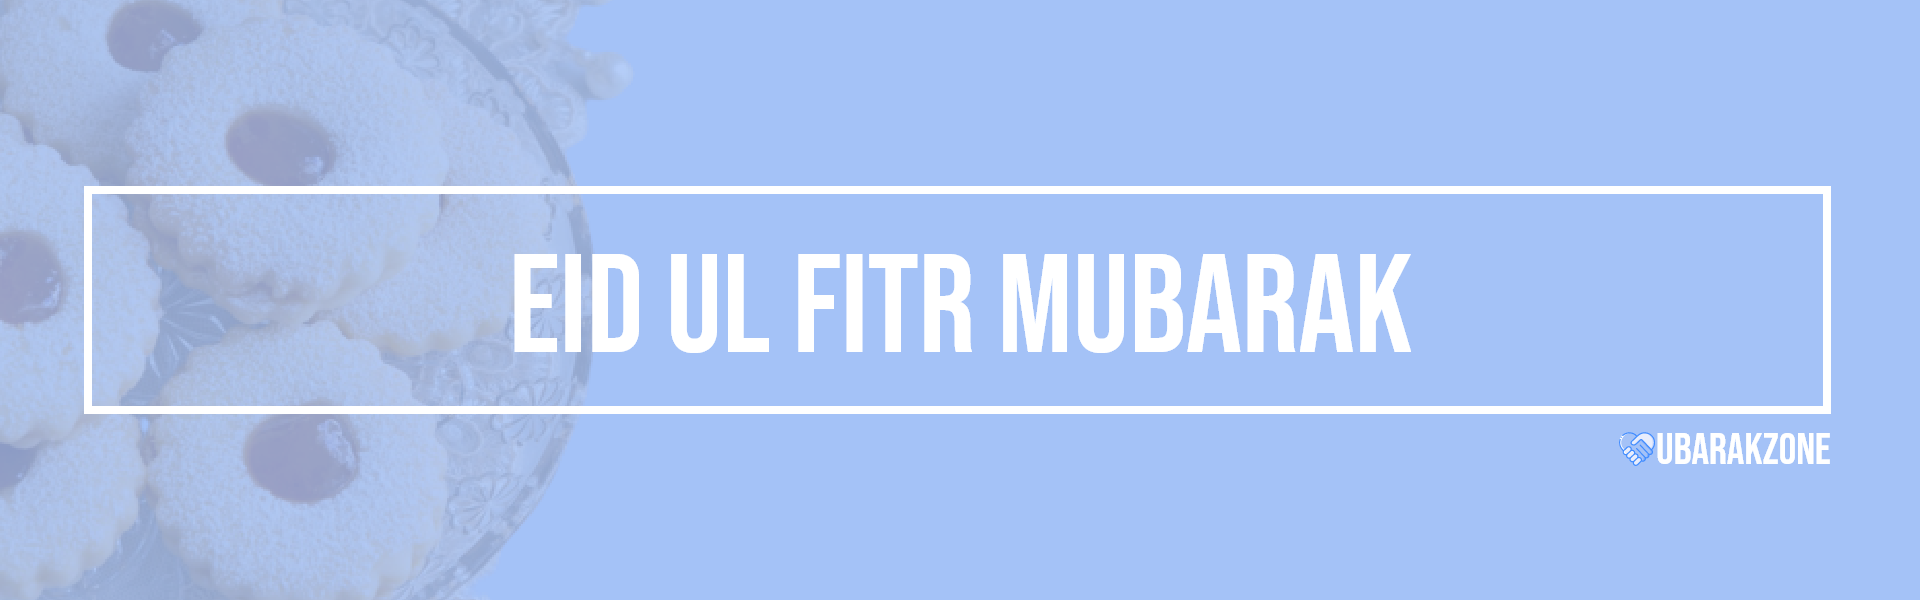 eid ul fitr mubarak wishes messages